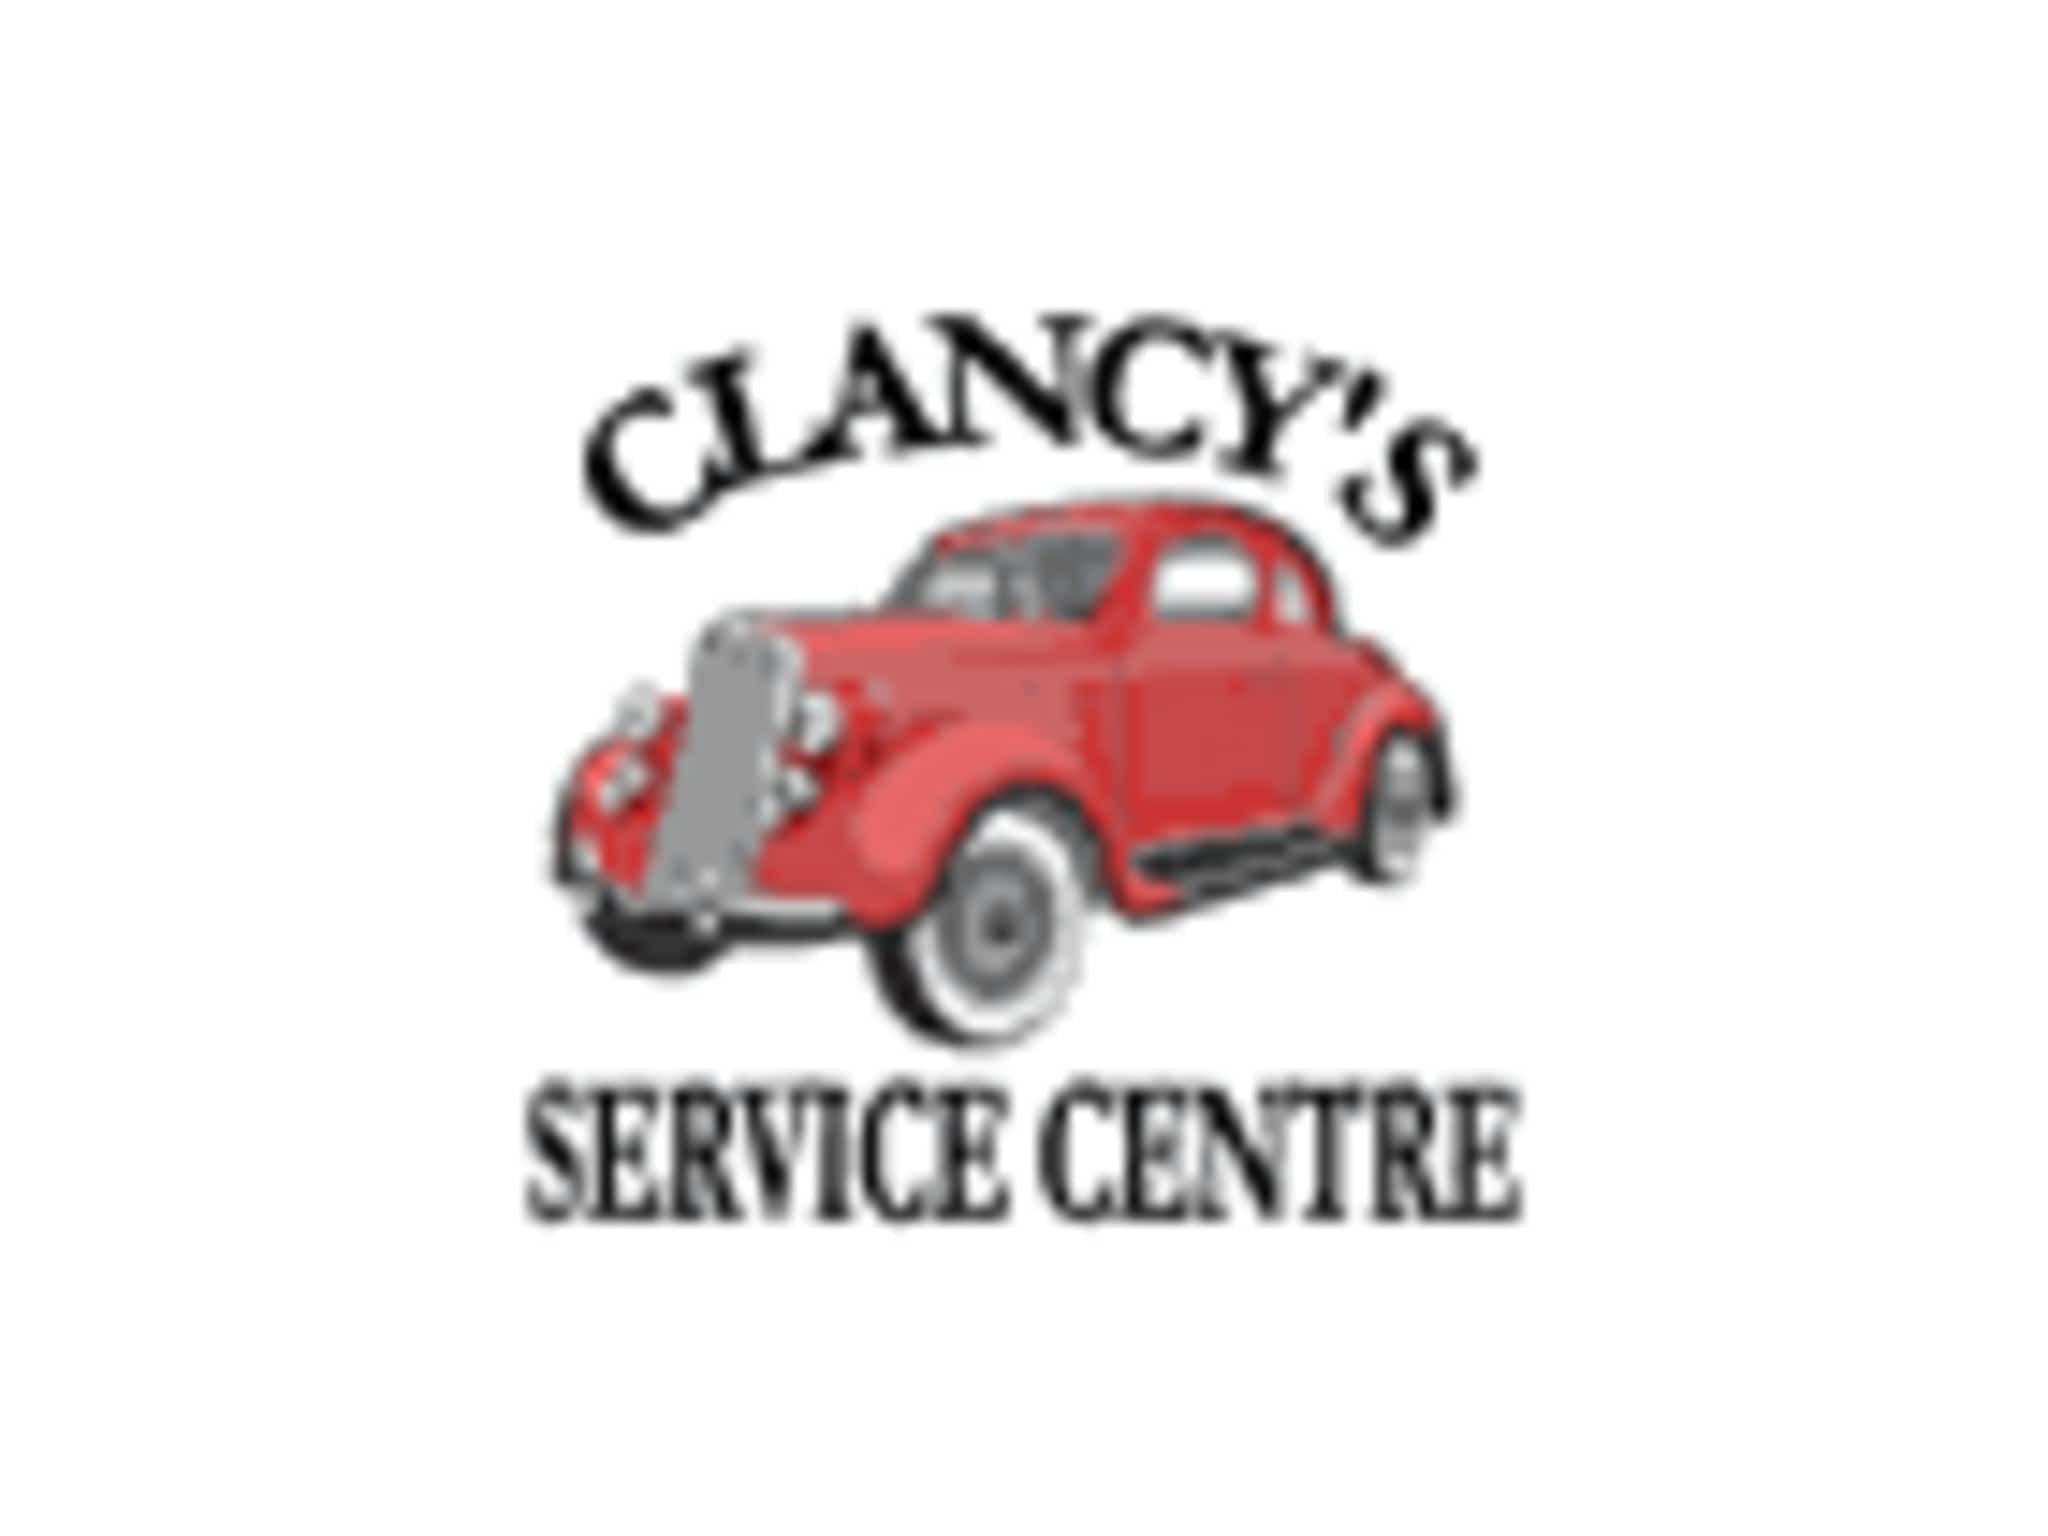 photo Clancy's Service Centre